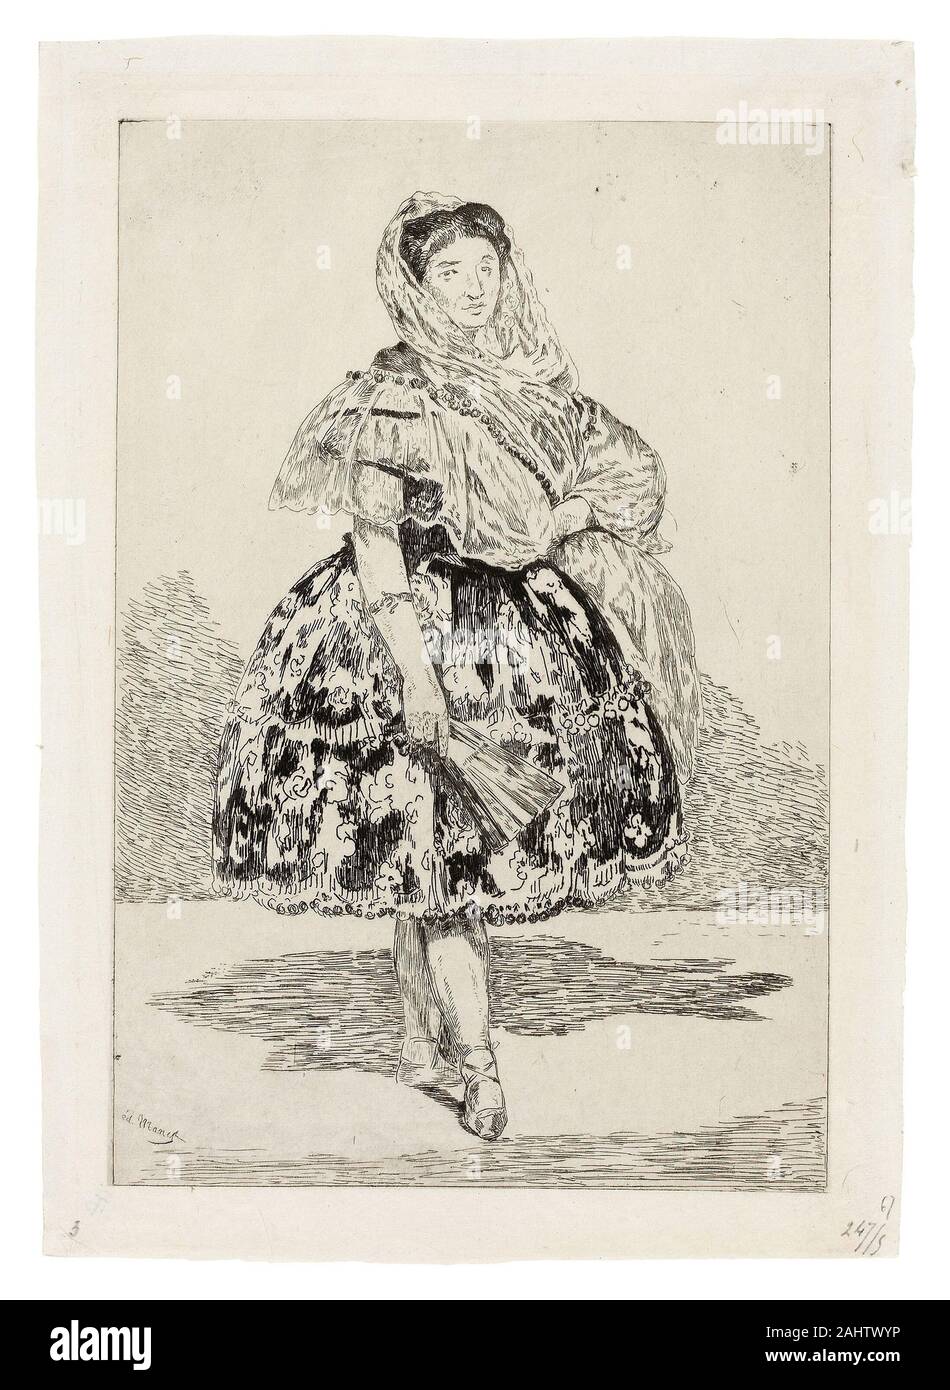 Édouard Manet. Lola de Valence. 1863. Francia. Aguafuerte en negro sobre papel japonés establecido de marfil Foto de stock